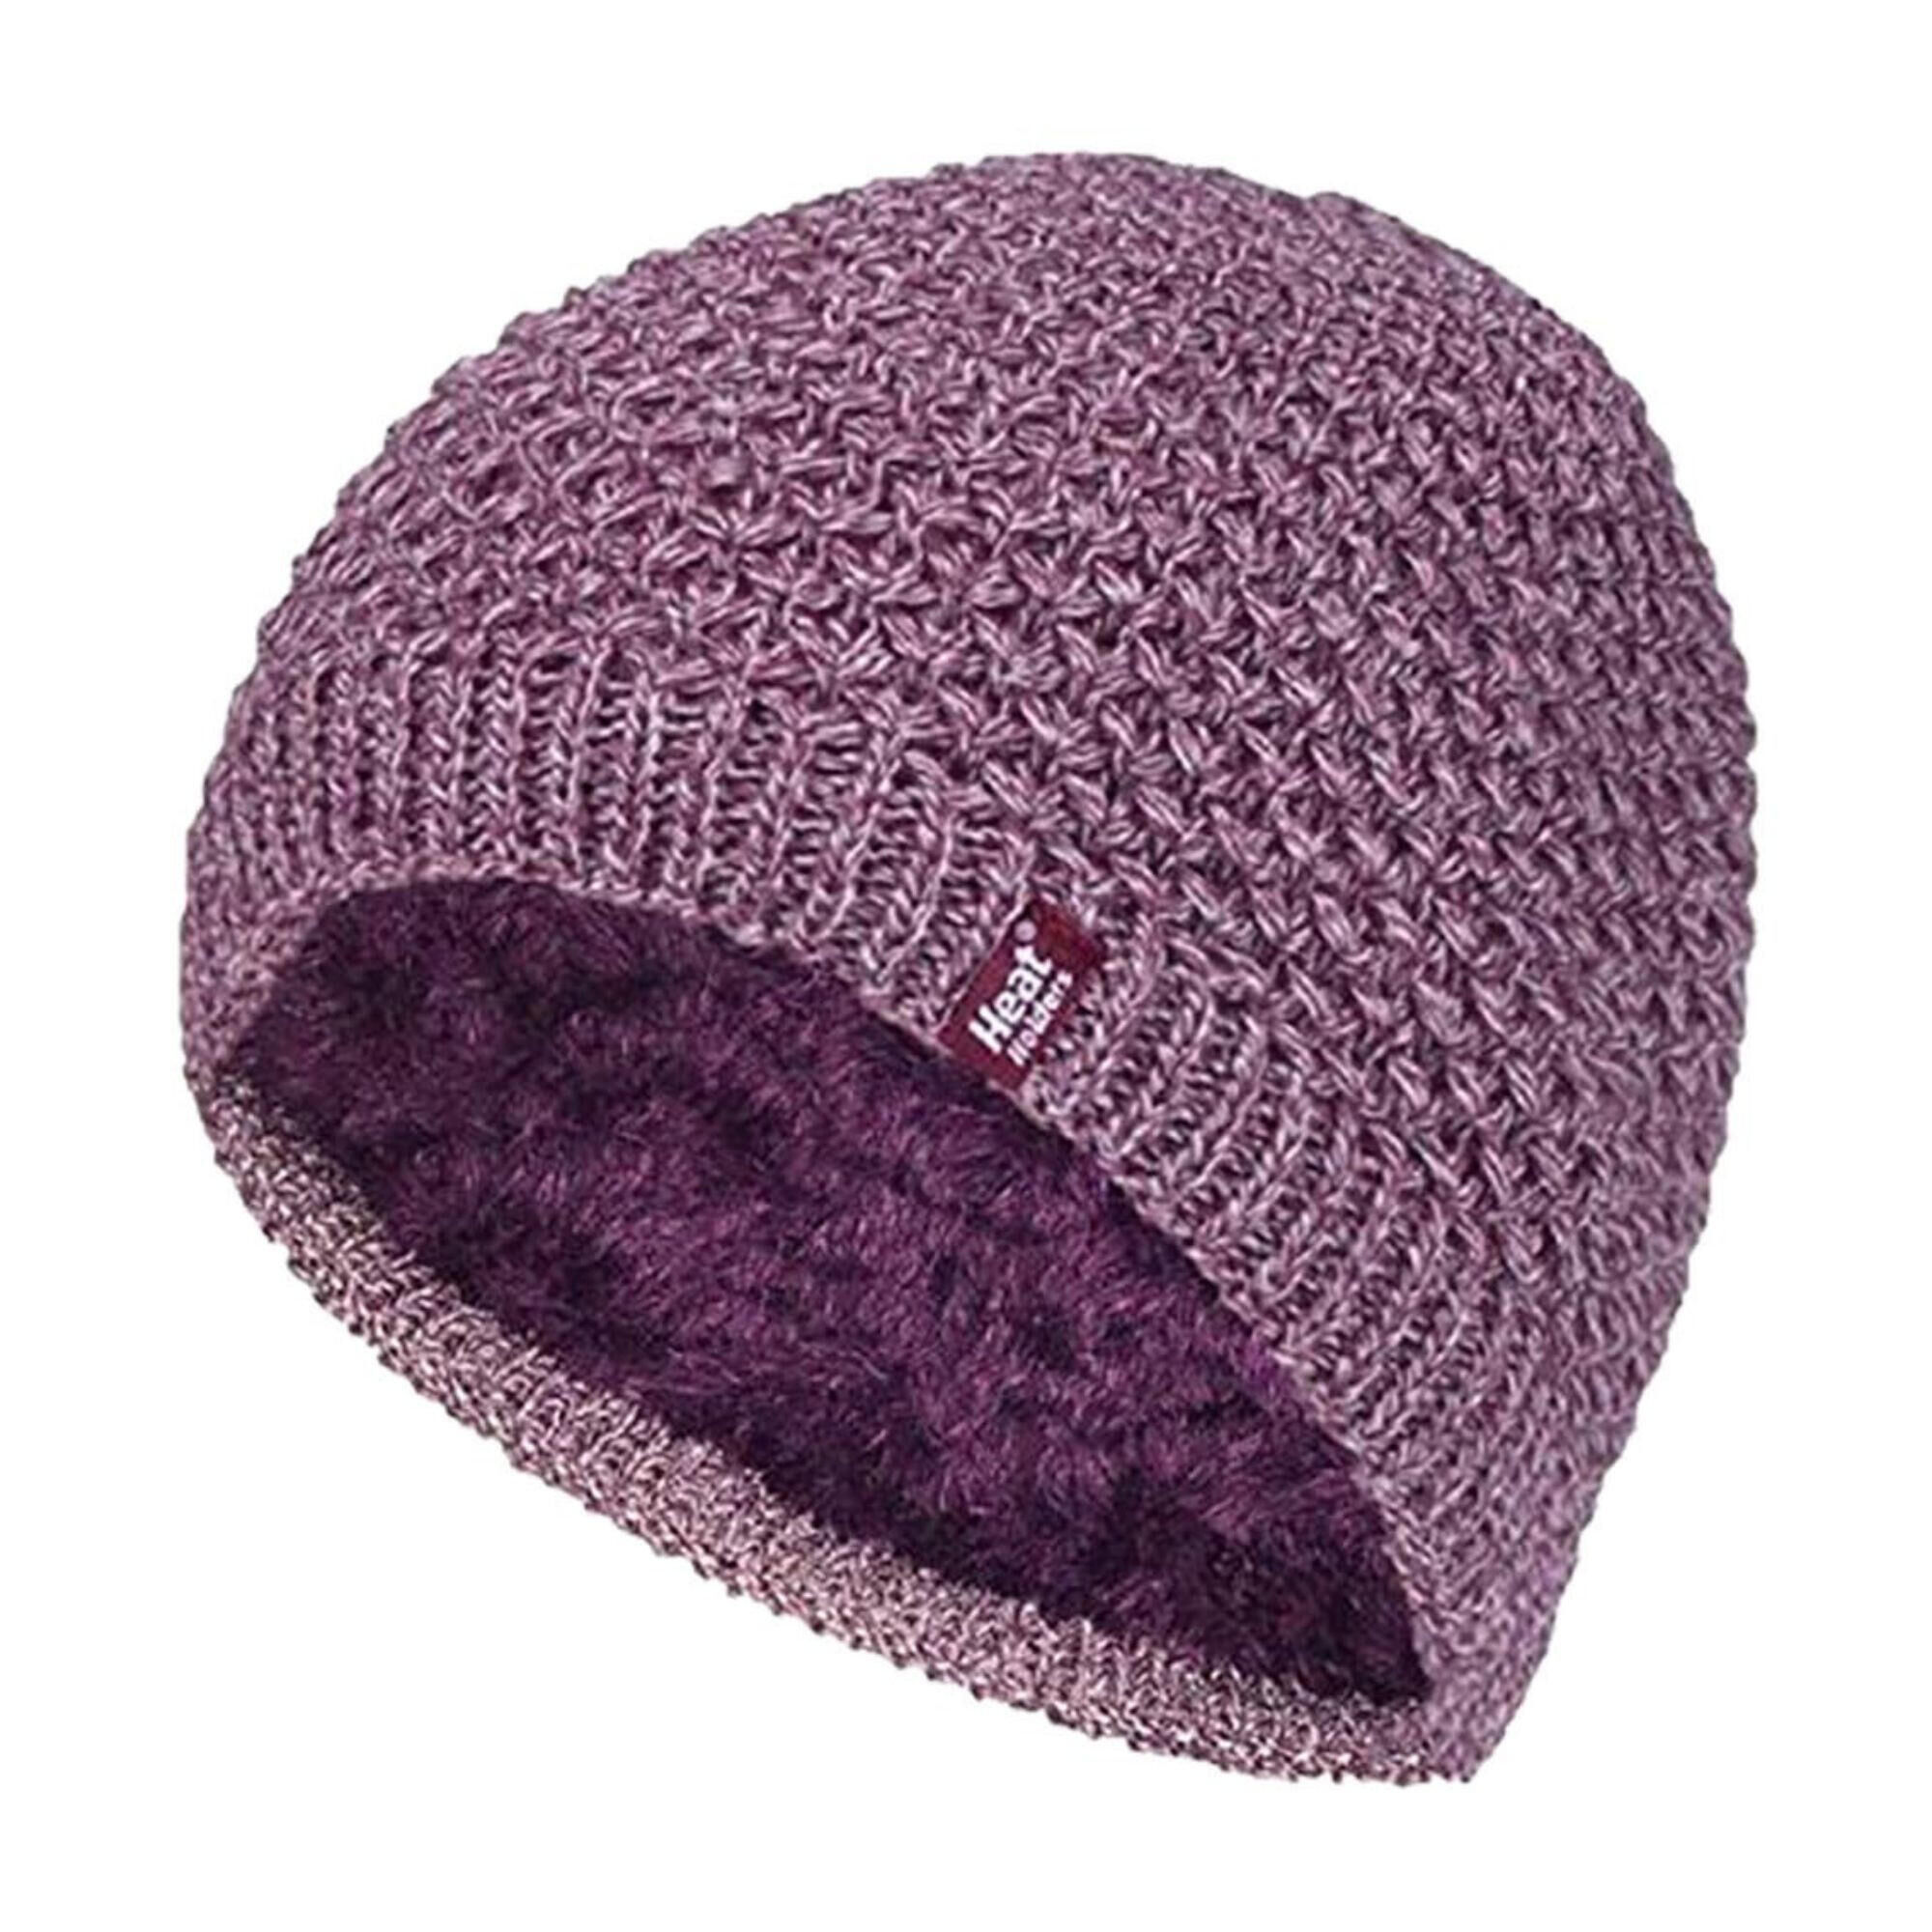 HEAT HOLDERS Ladies Knit Fleece Lined Warm Thermal Beanie Hat